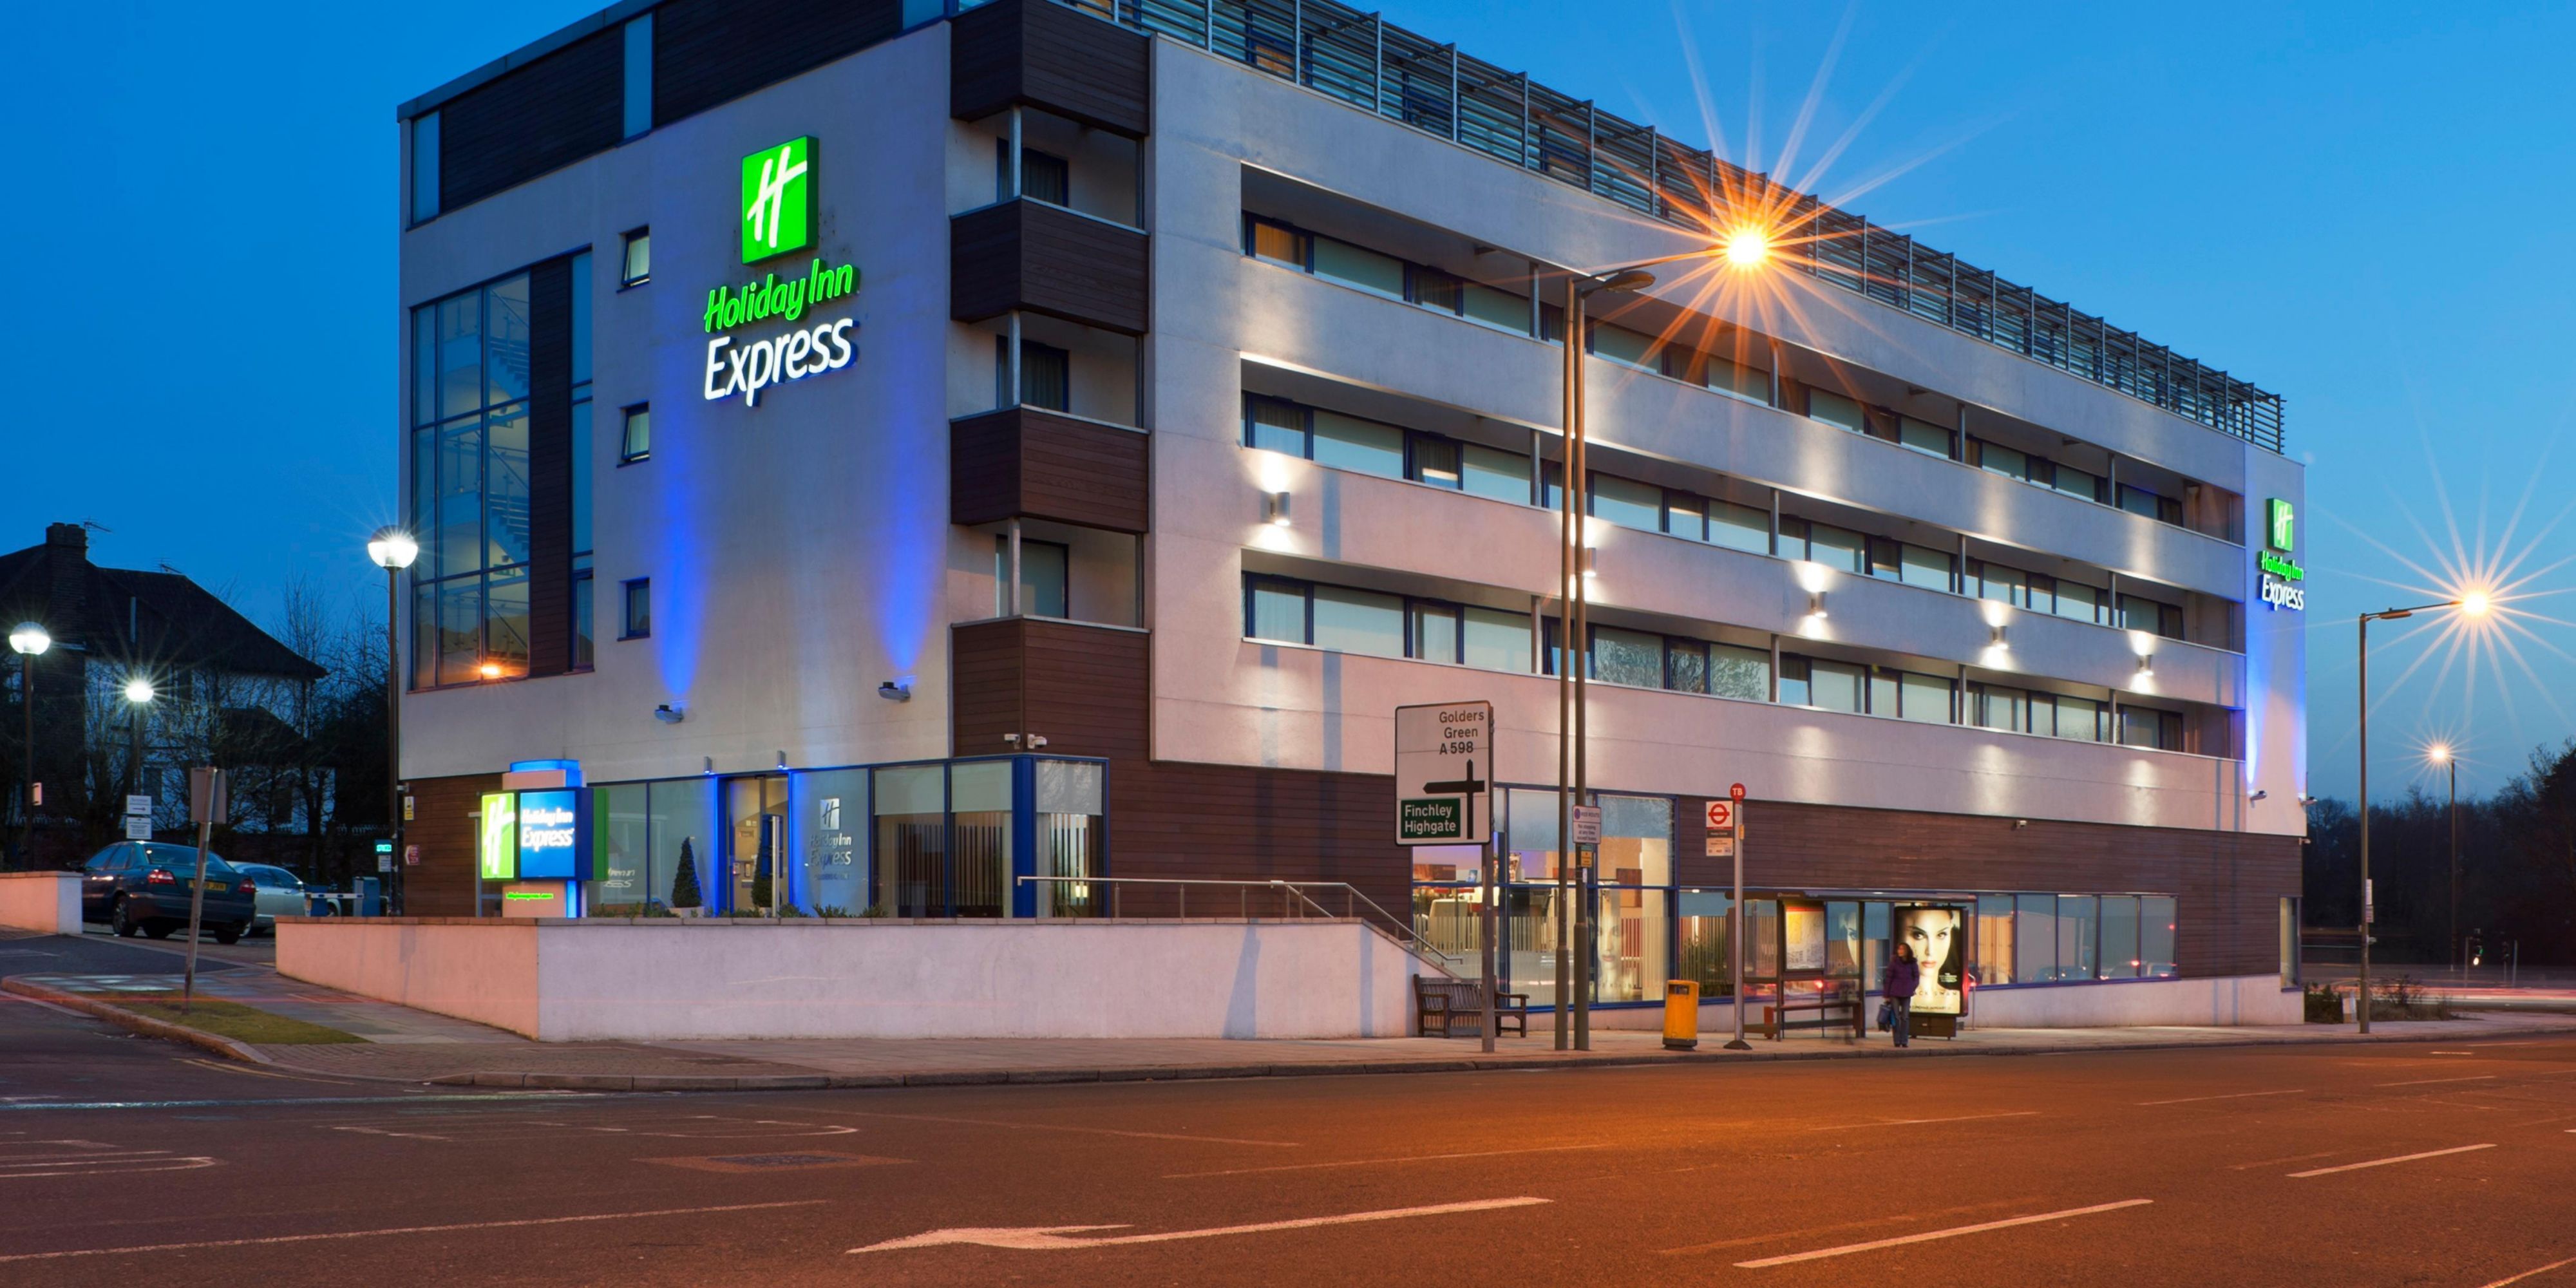 Holiday Inn Express Hotel London - Golders Green (A406)